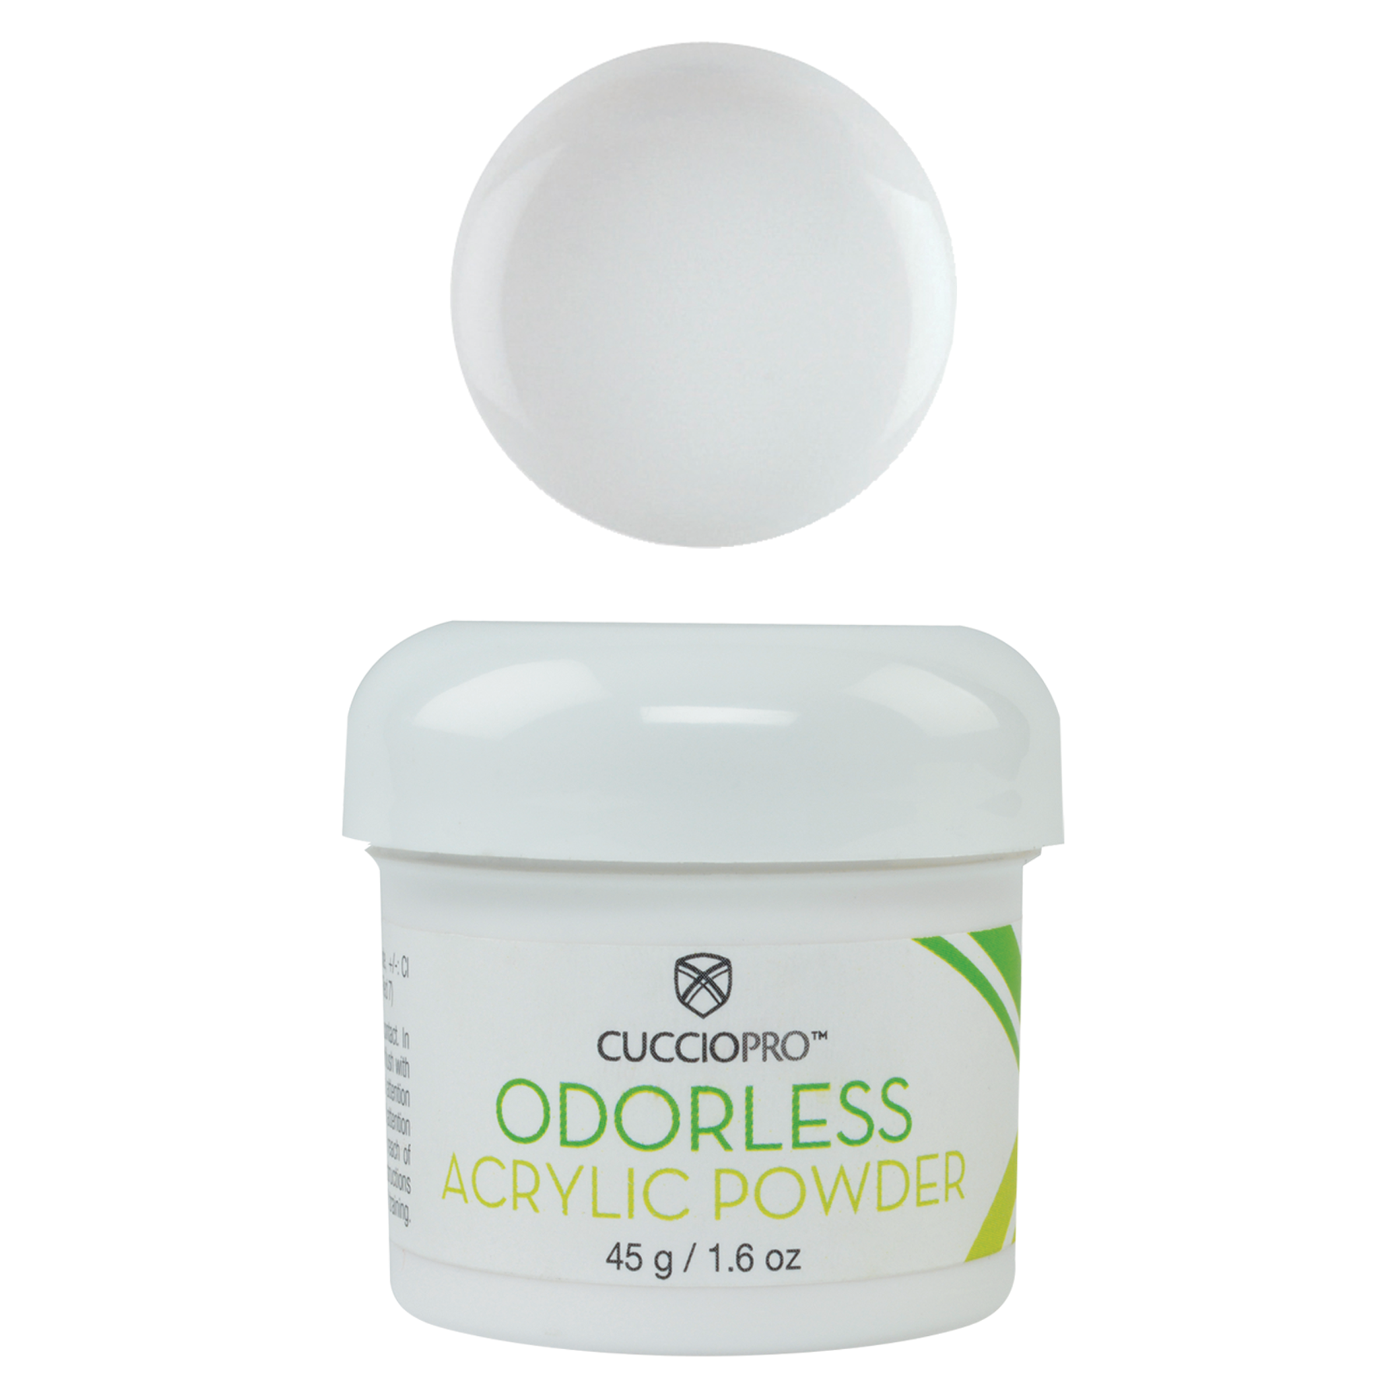 Odorless Acrylic Powder, 1.6 oz. - Super White